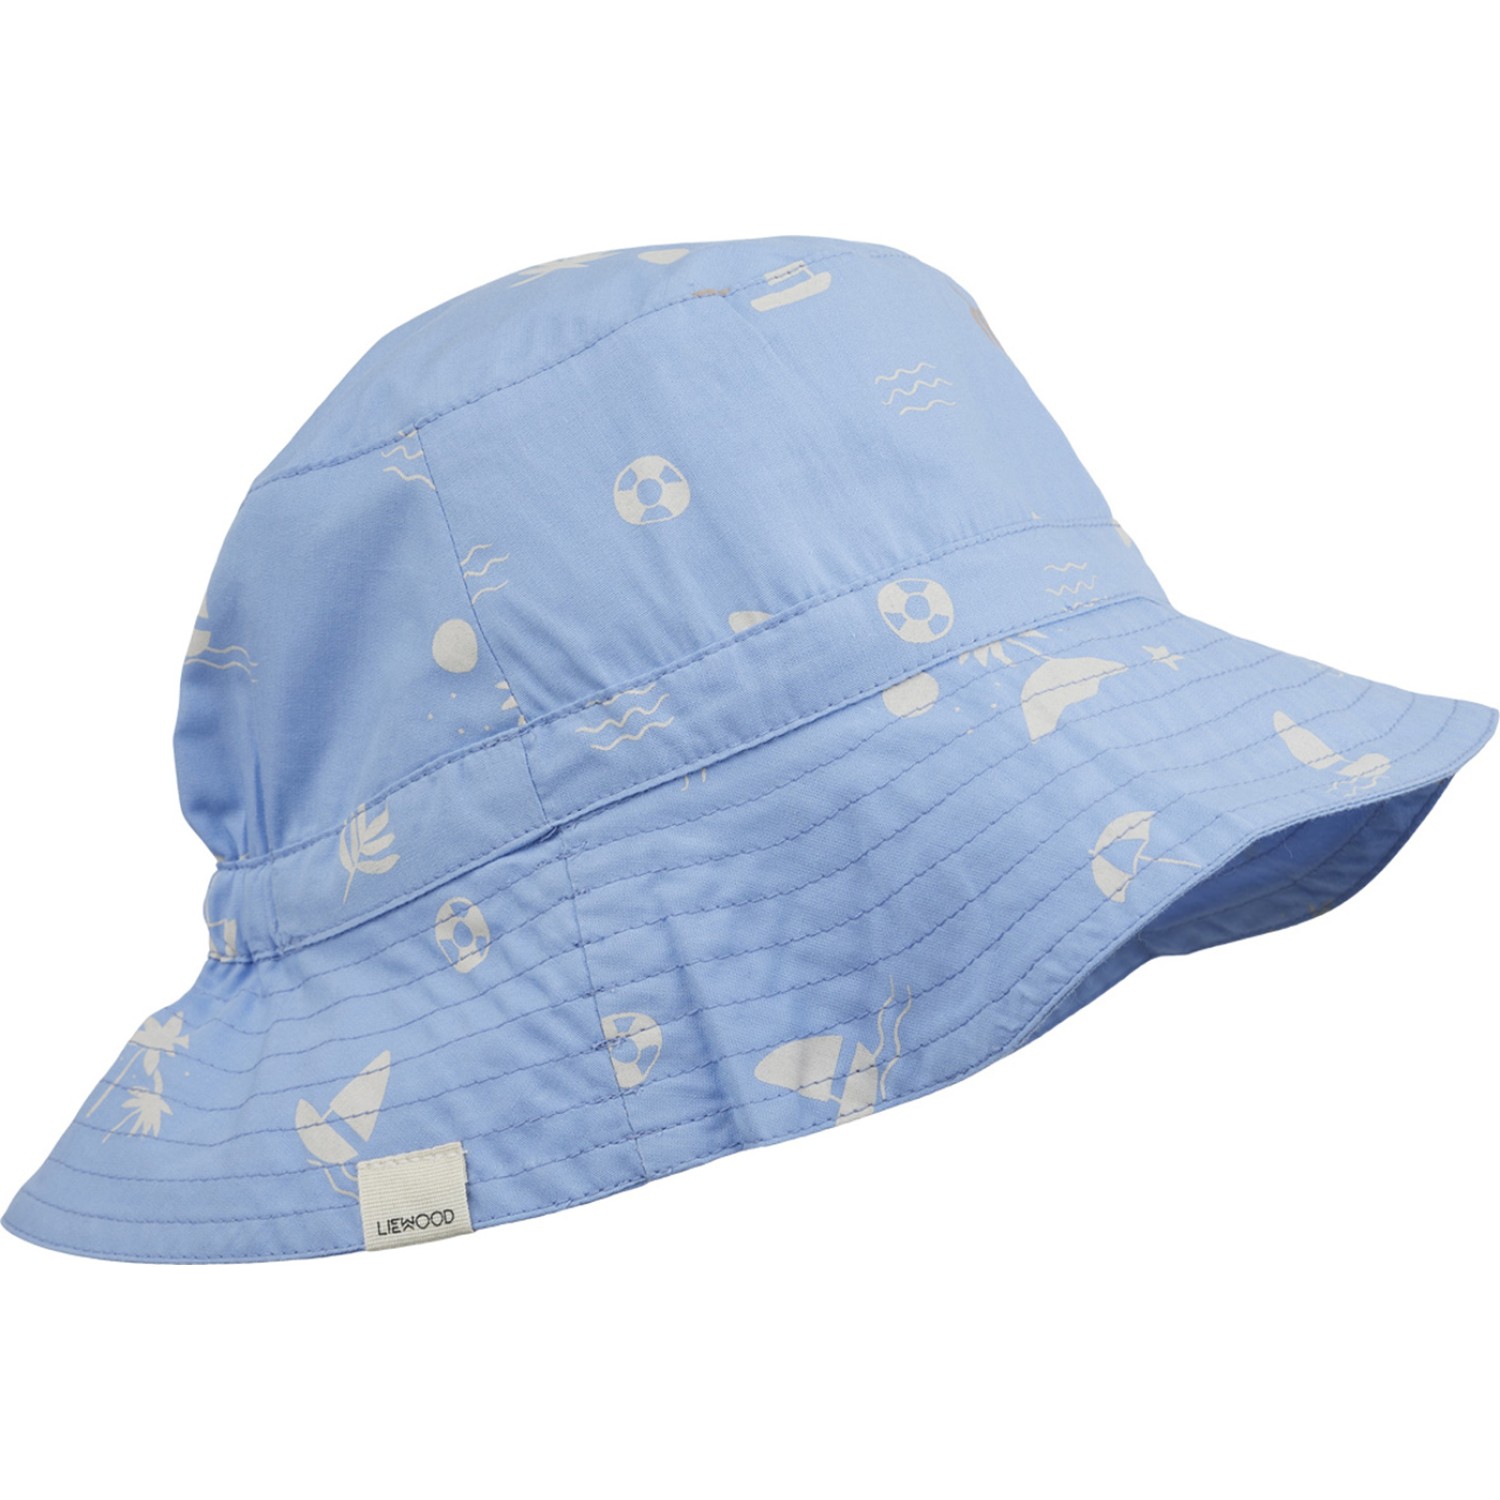 Sander bucket hat - Seaside sky blue